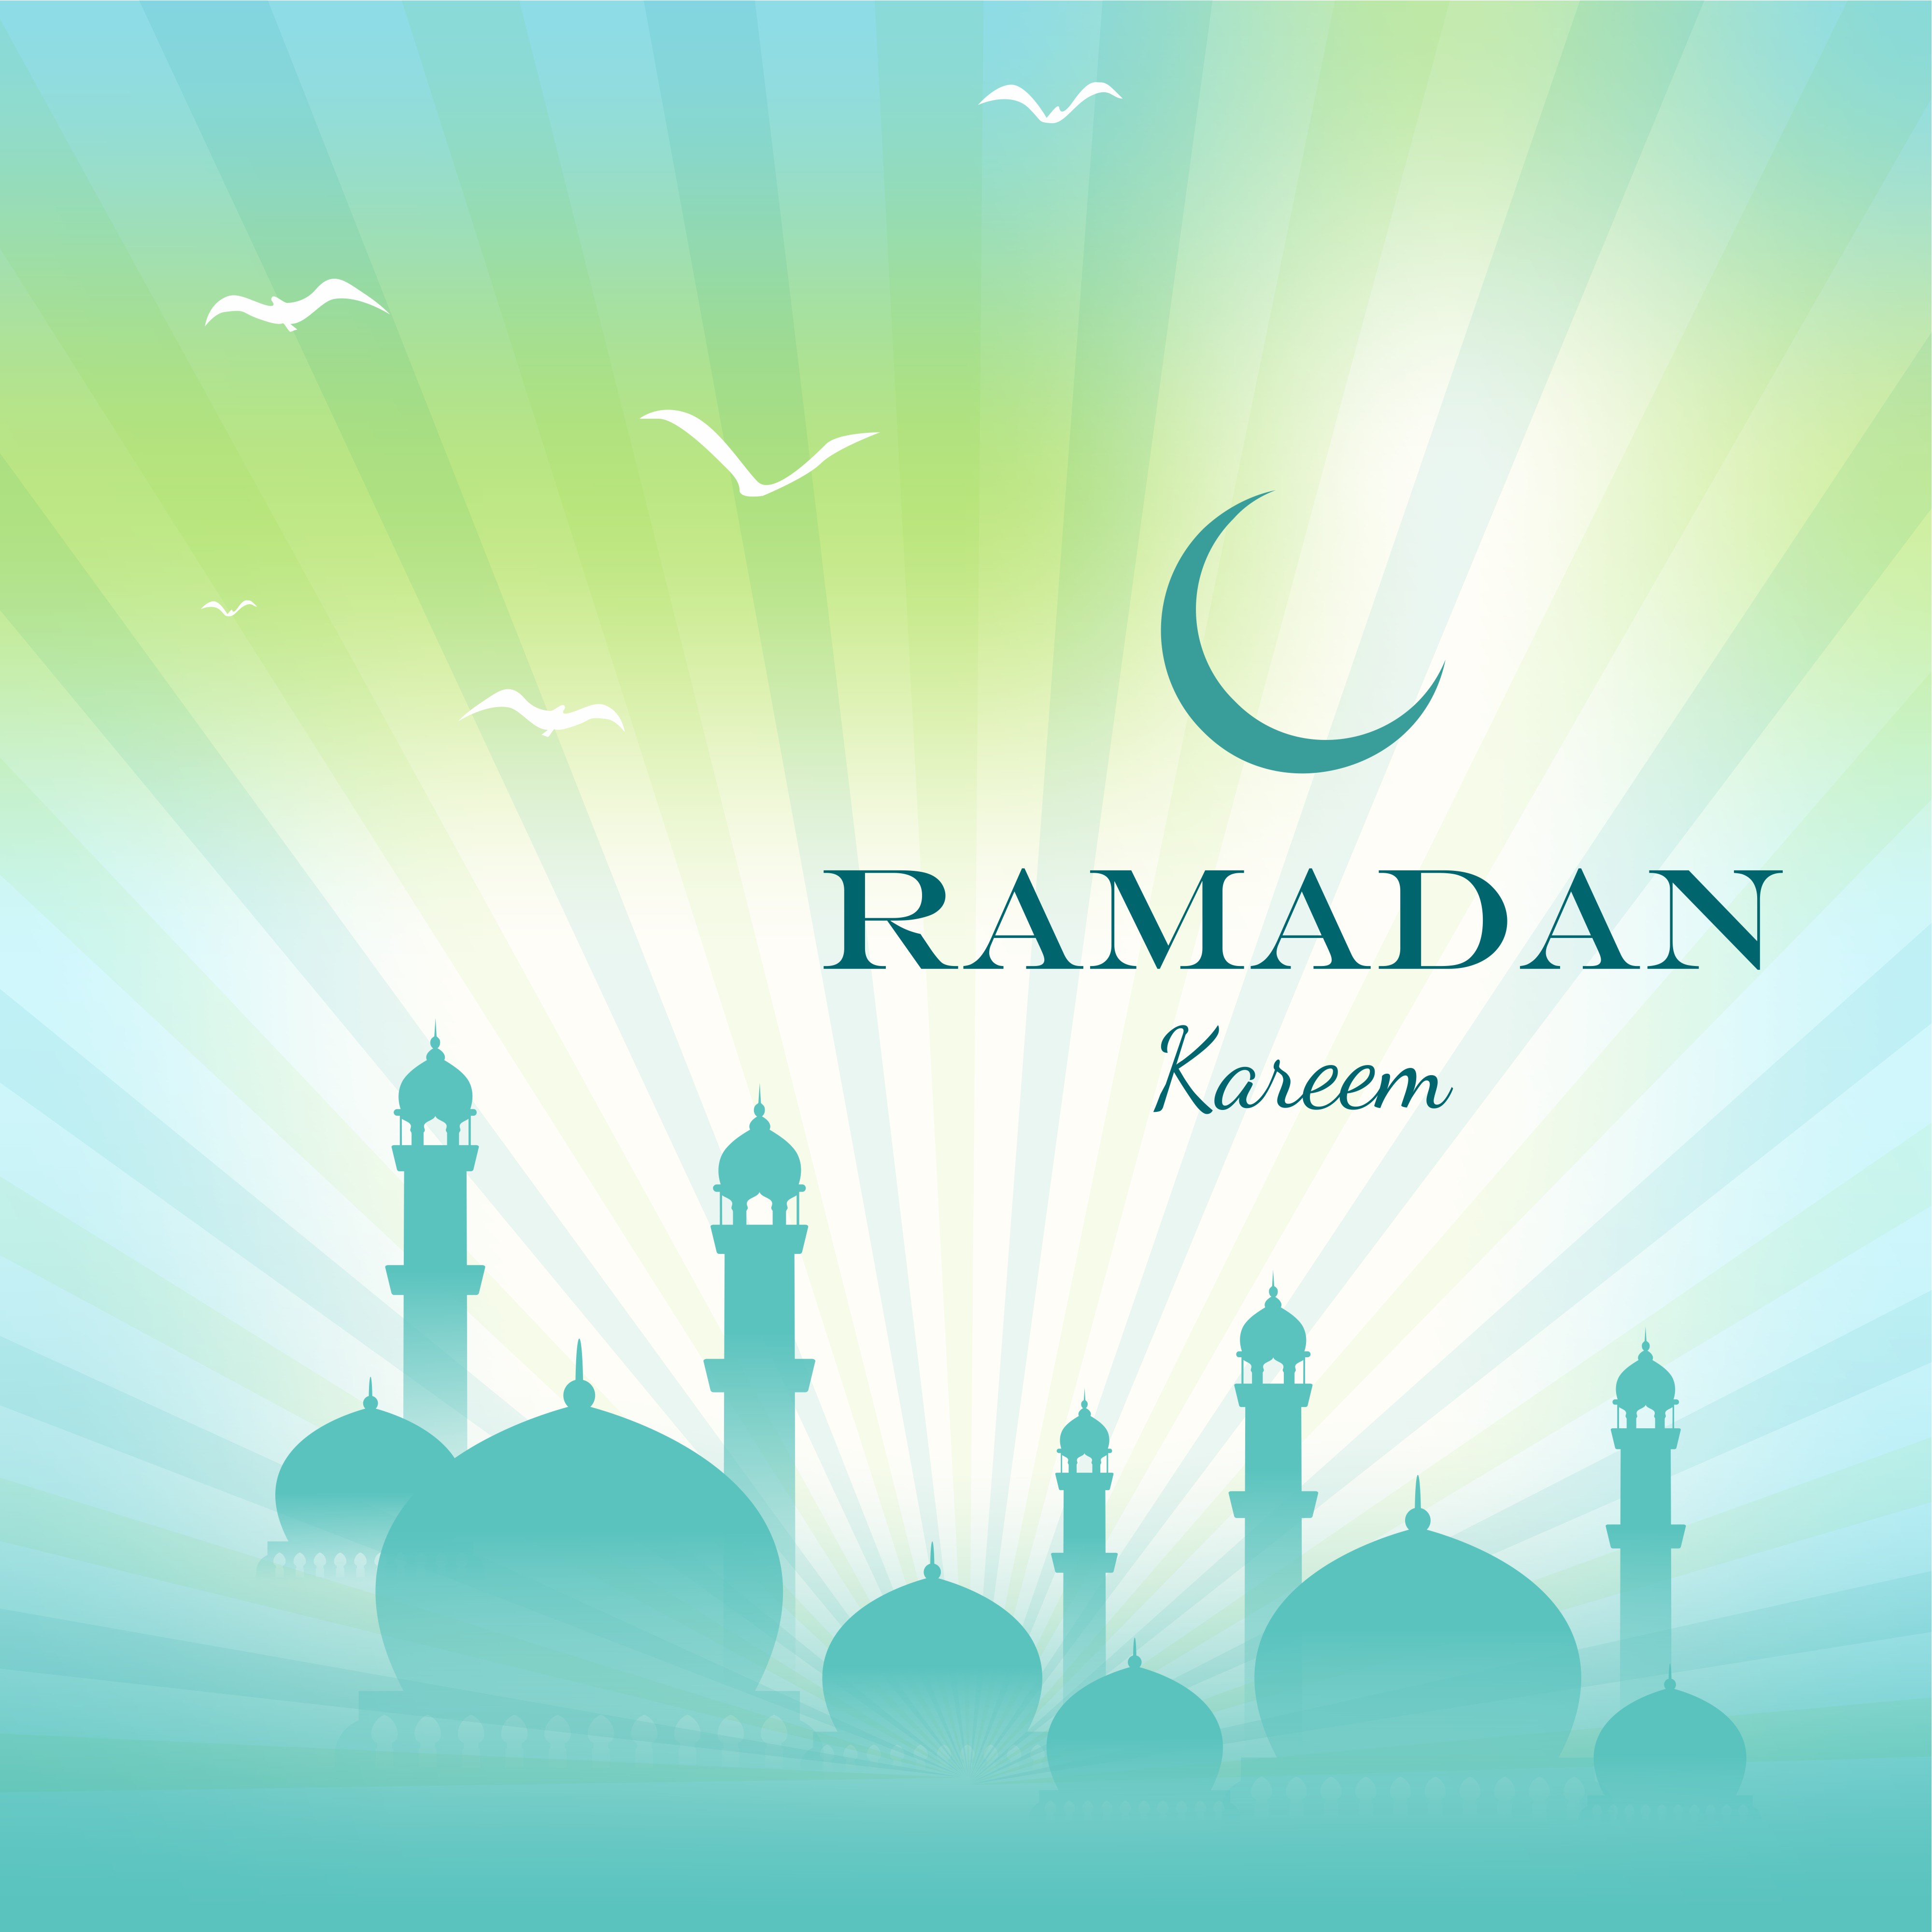 Ramadan Kareem Greeting Card and Background Islamic with Arabic Pattern